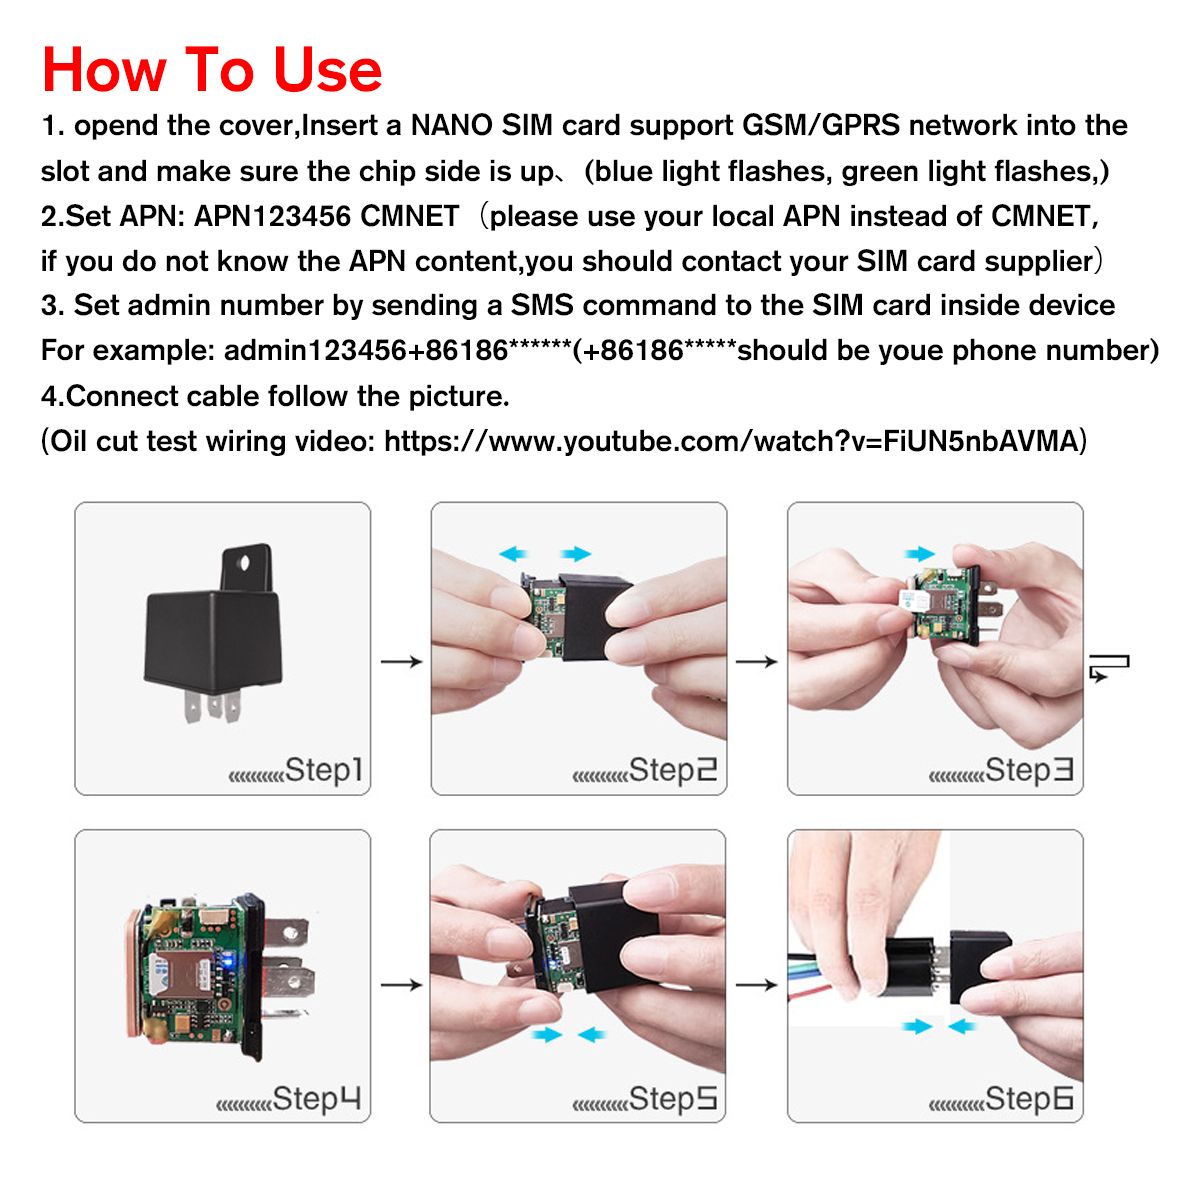 CJ720-Relay-GPS-Tracker-GSM-GPRS-Locator-Anti-theft-System-Remote-Cut-Off-Resume-Fuel-80mAh-For-10-4-1659919